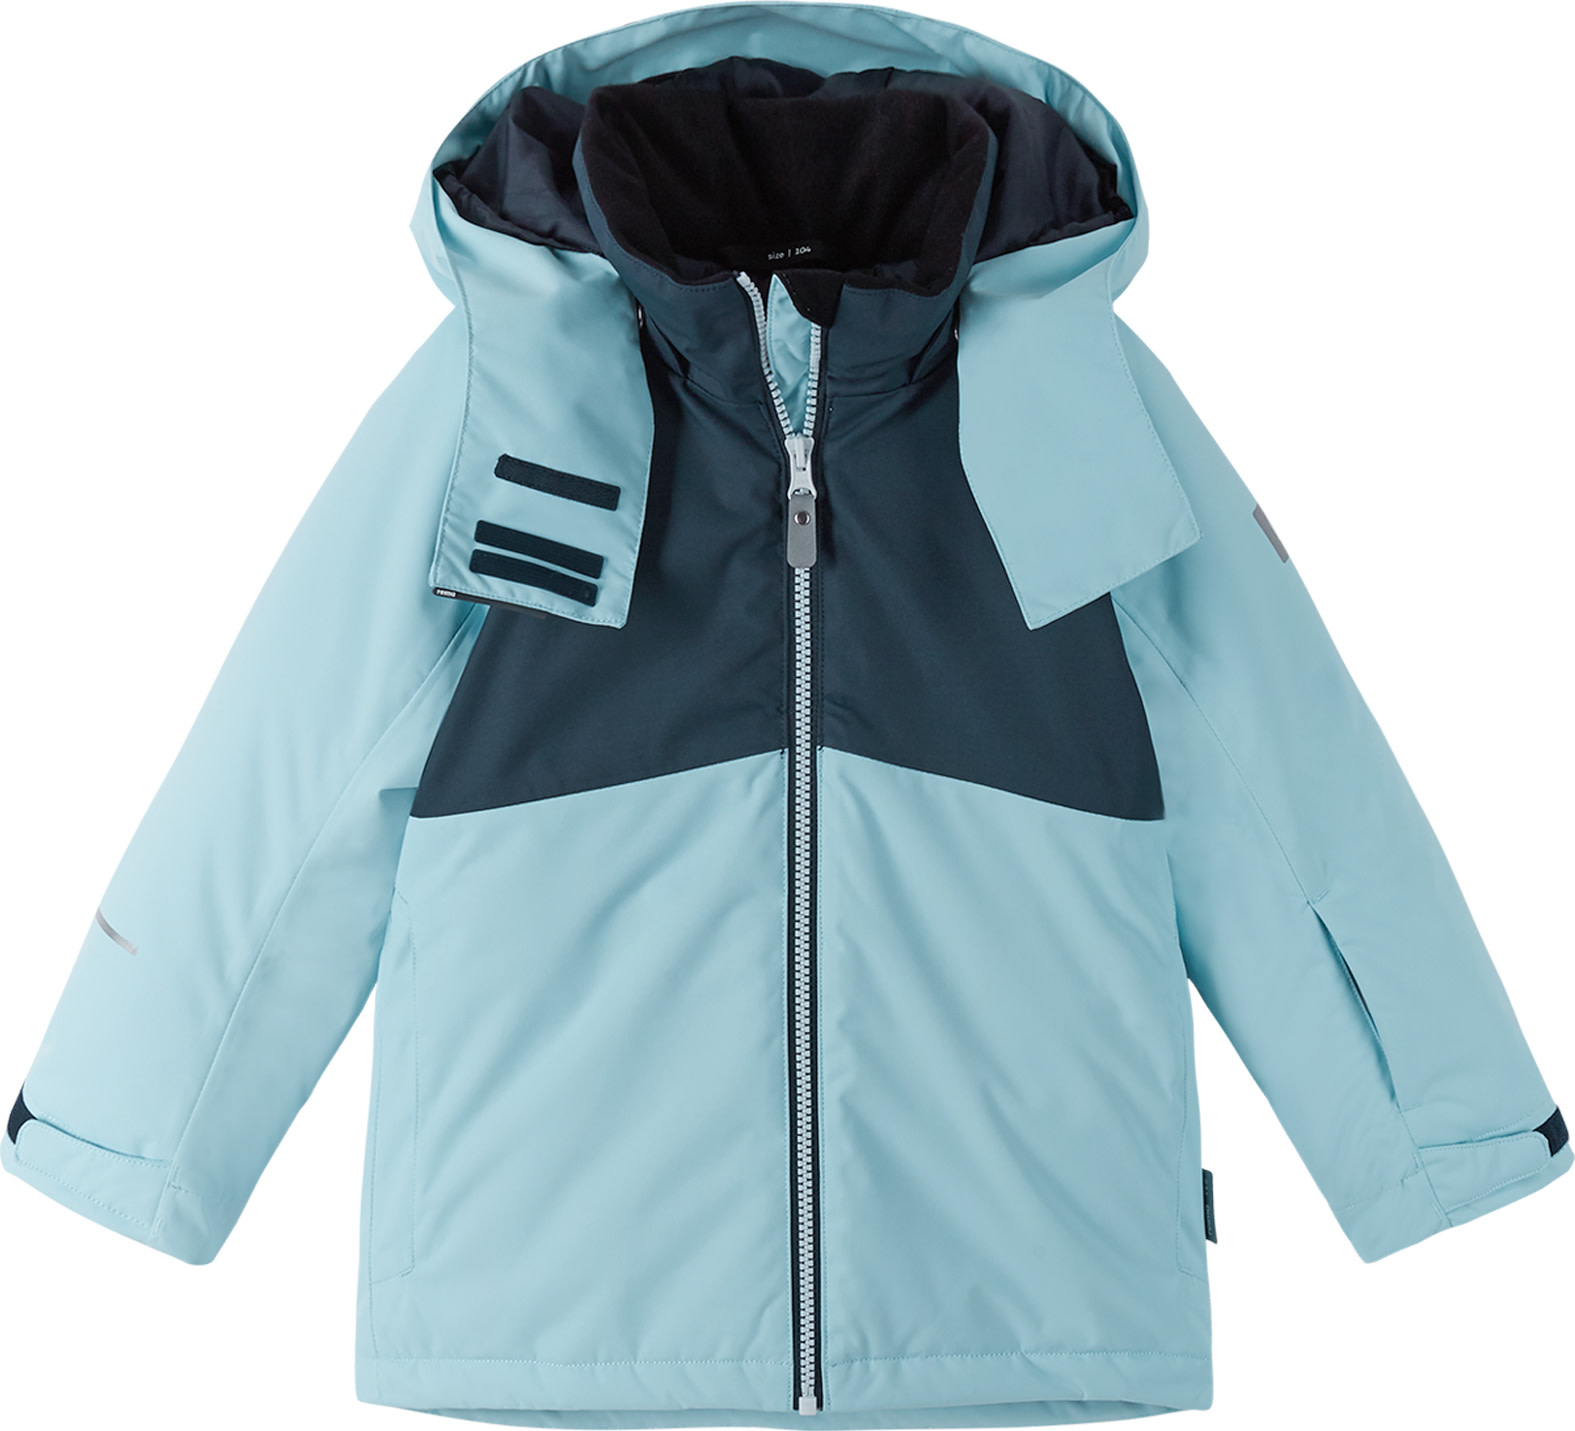 Kids’ Reimatec Winter Jacket Salla Light turquoise 7090